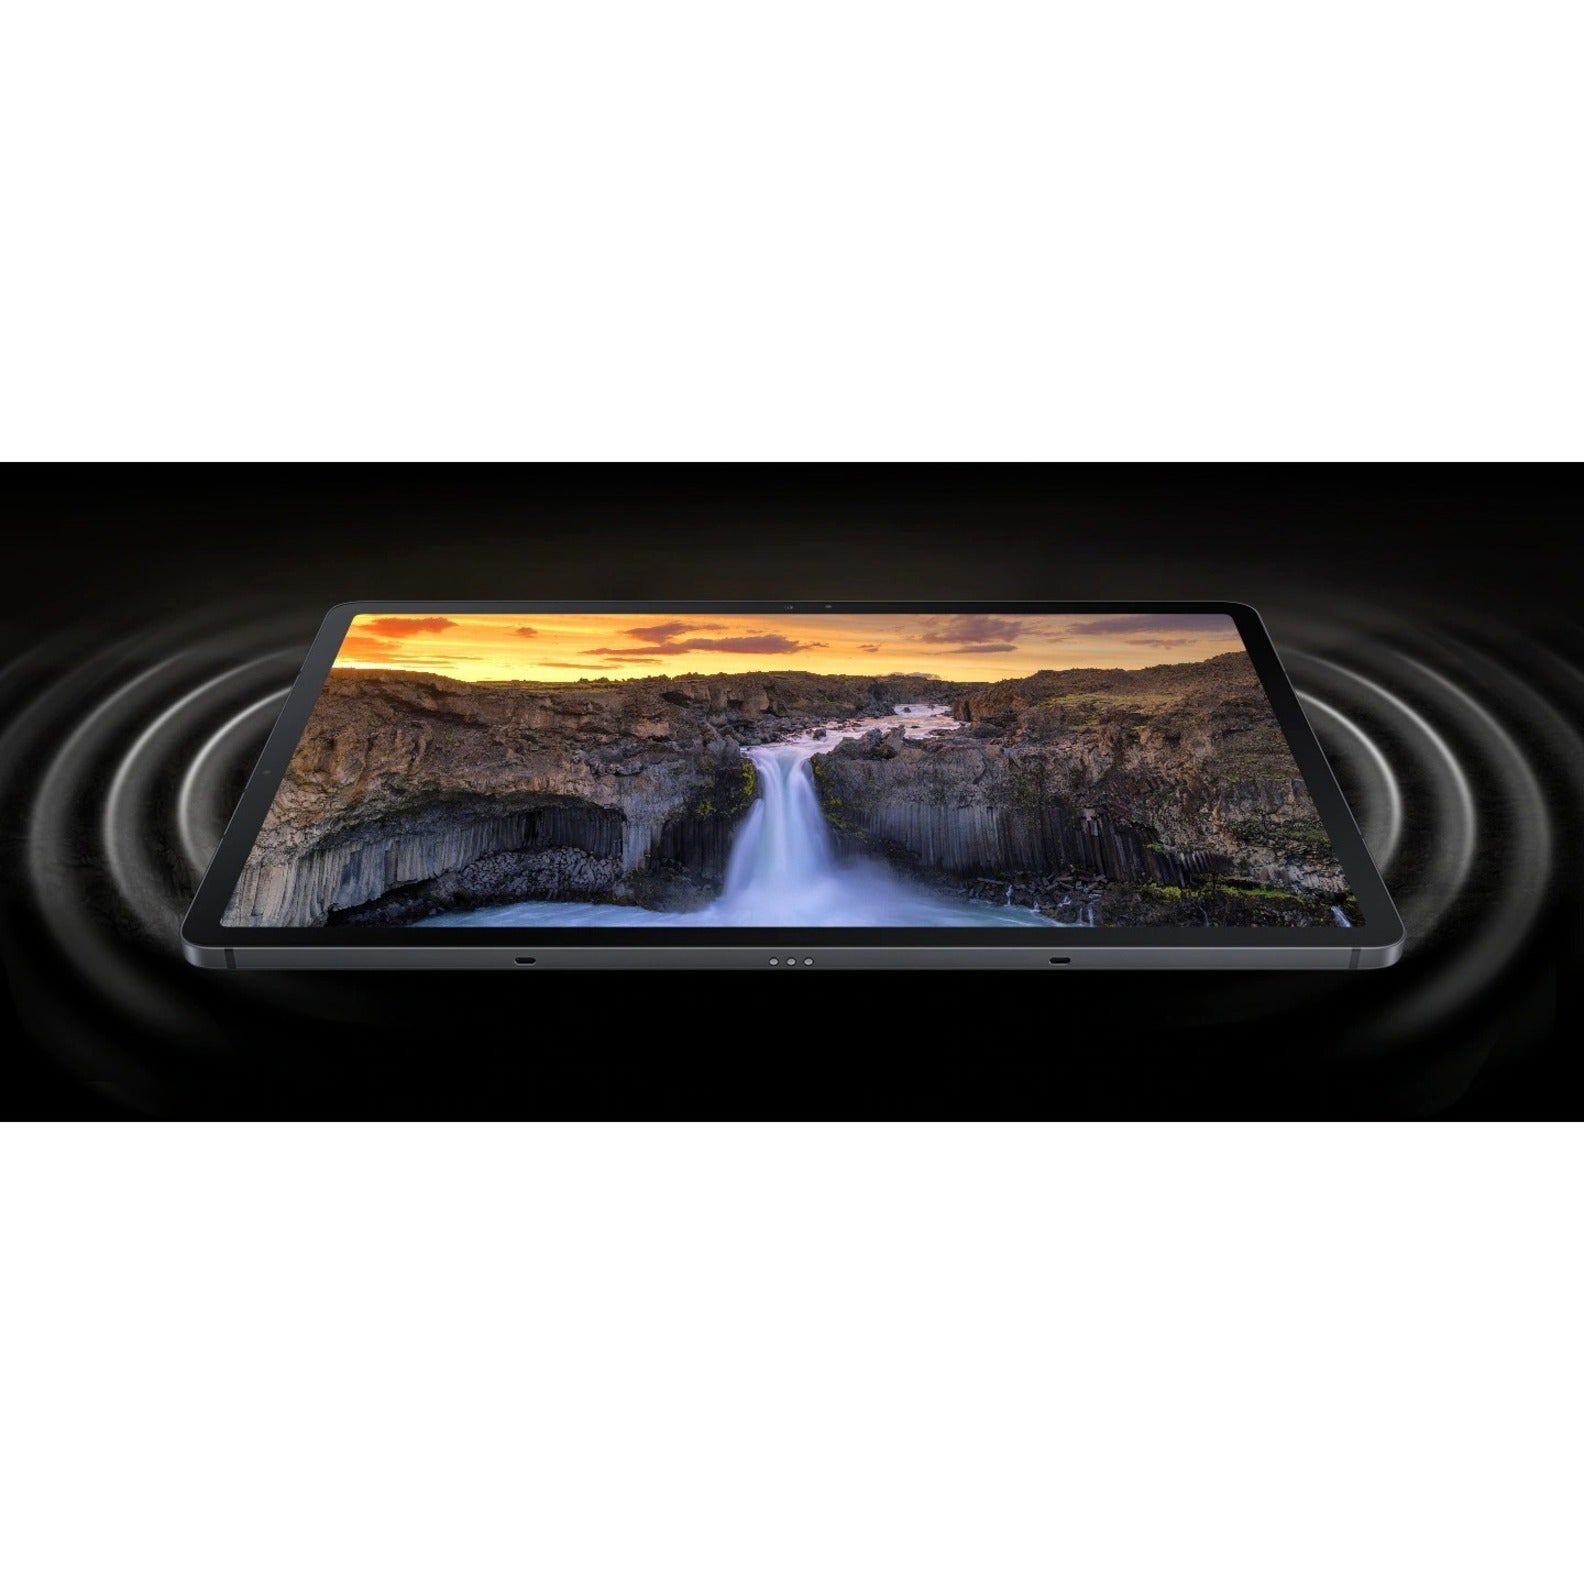 Samsung SM-T733NZKAXAR Galaxy Tab S7 FE 64GB Mystic Black (Wi-Fi), 12.4" WQXGA Display, Snapdragon 750G 5G, 4GB RAM, Android 11 Tablet